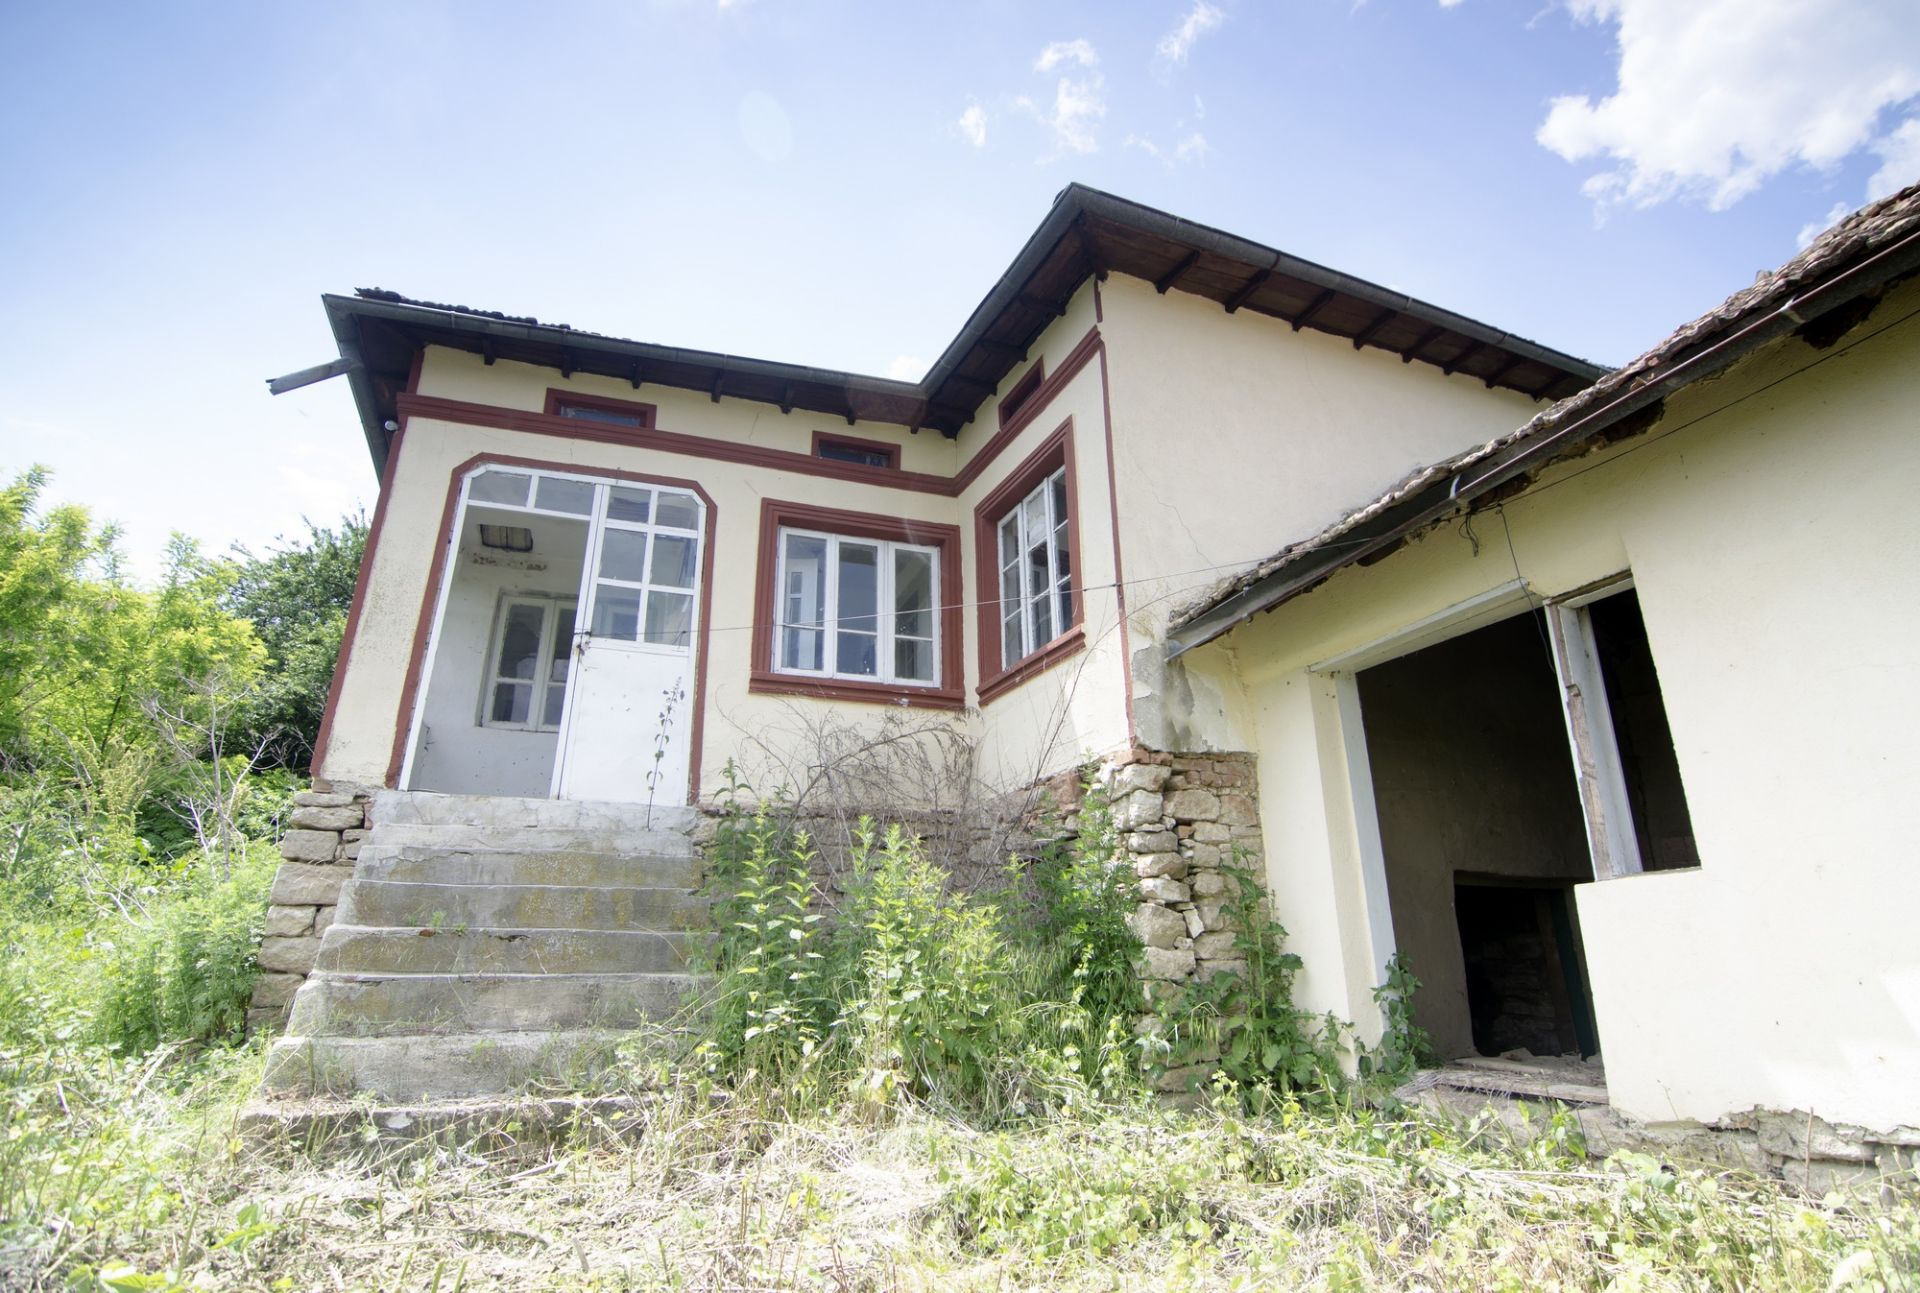 NICE FREEHOLD HOUSE IZVOROVO, DOBRICH, BULGARIA - Image 2 of 9